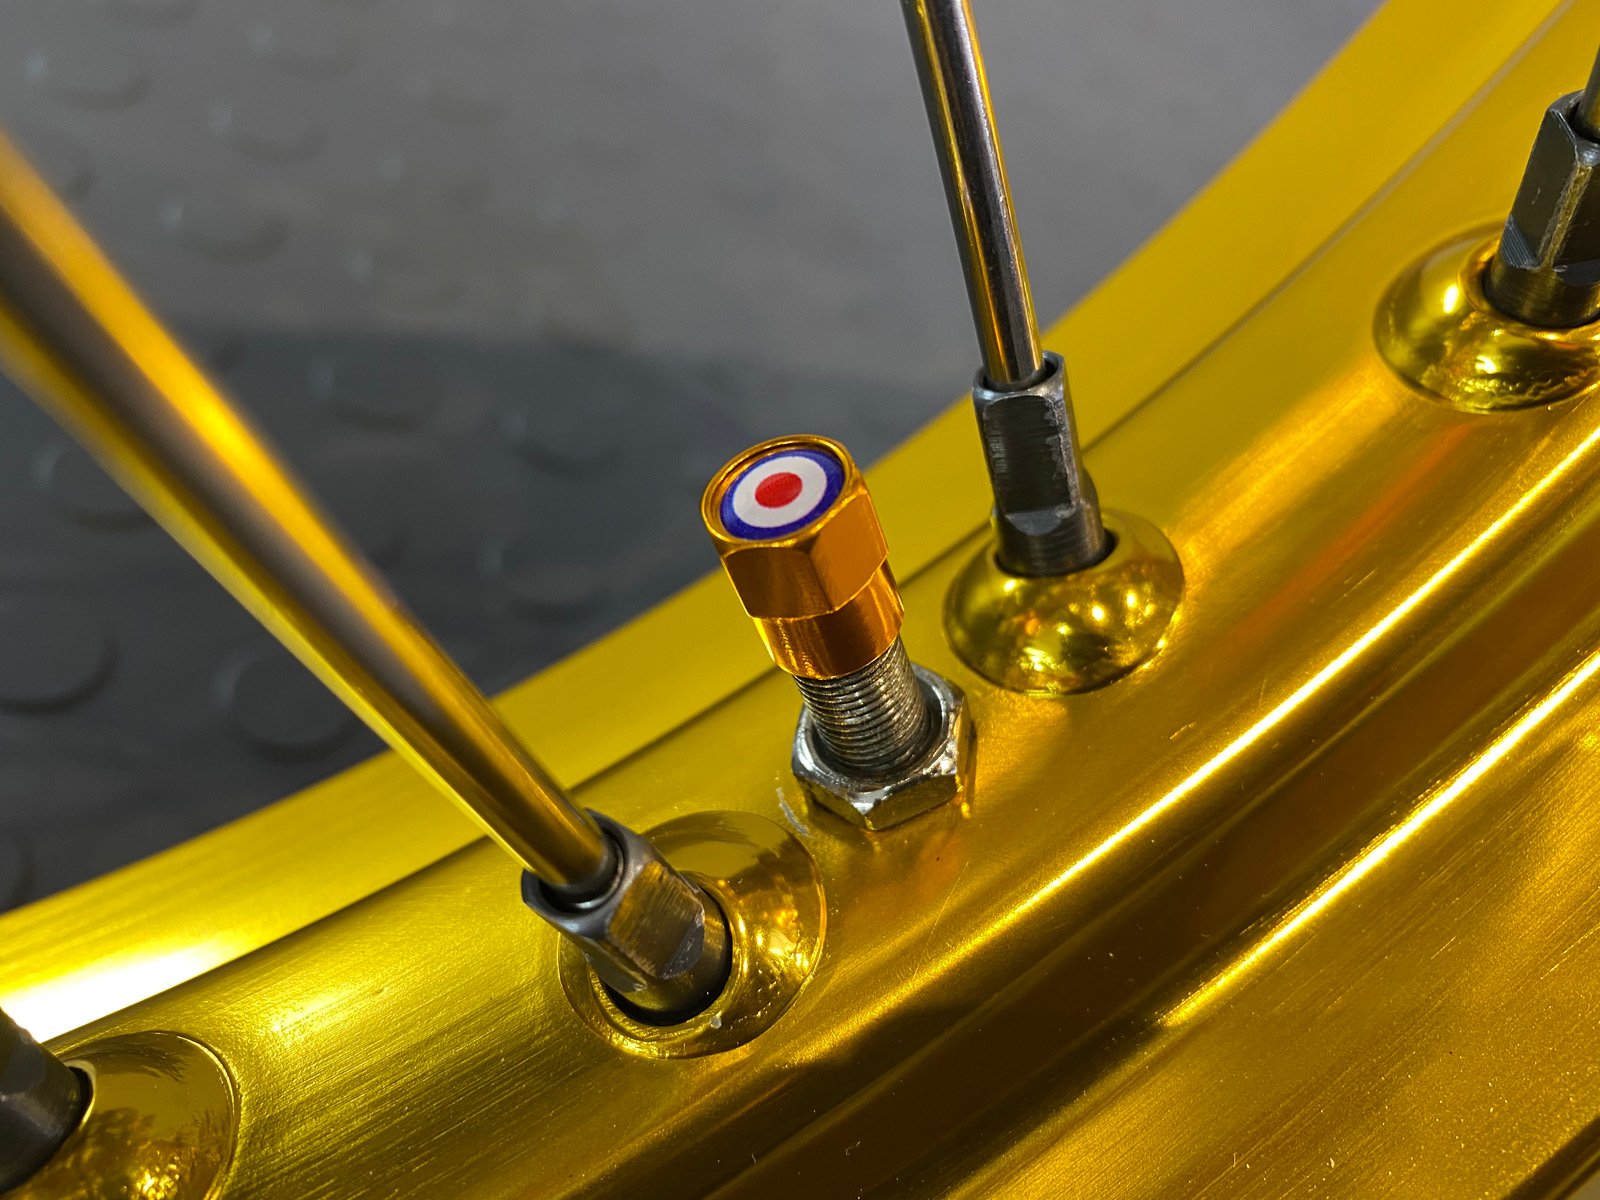 Spitfire Valve Cap On Gold Wheel